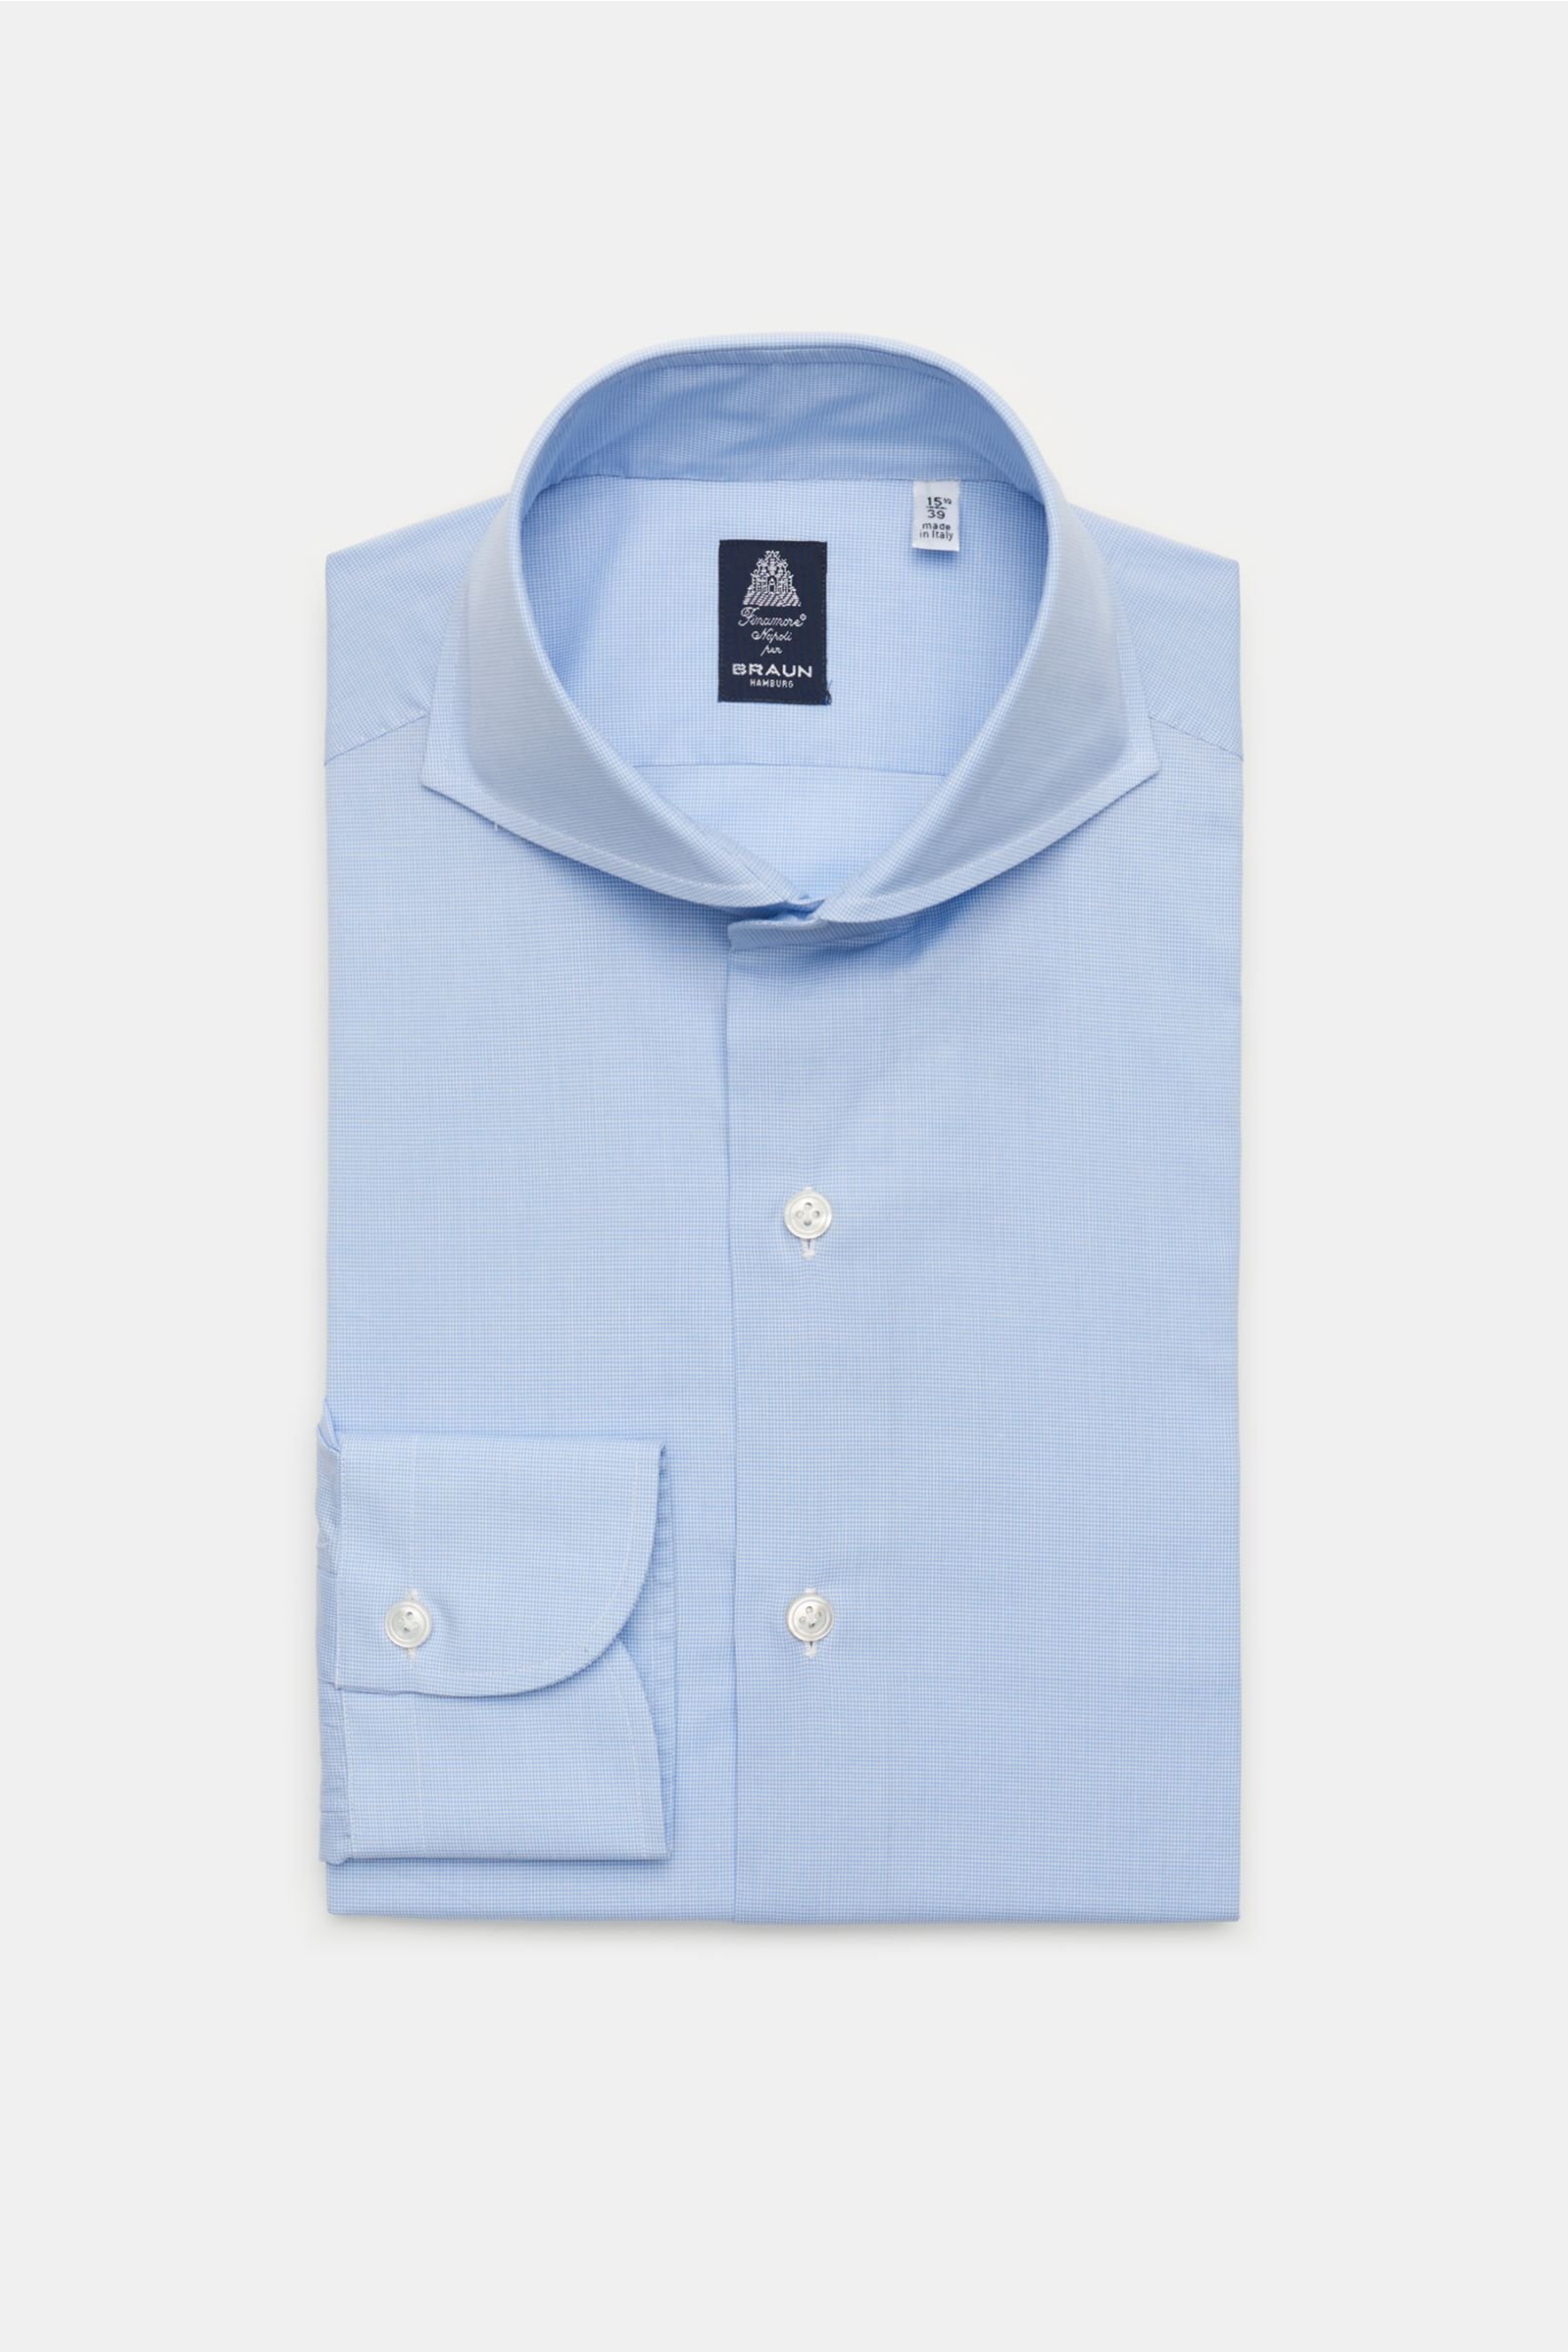 Business shirt 'Sergio Napoli' shark collar light blue/white checked